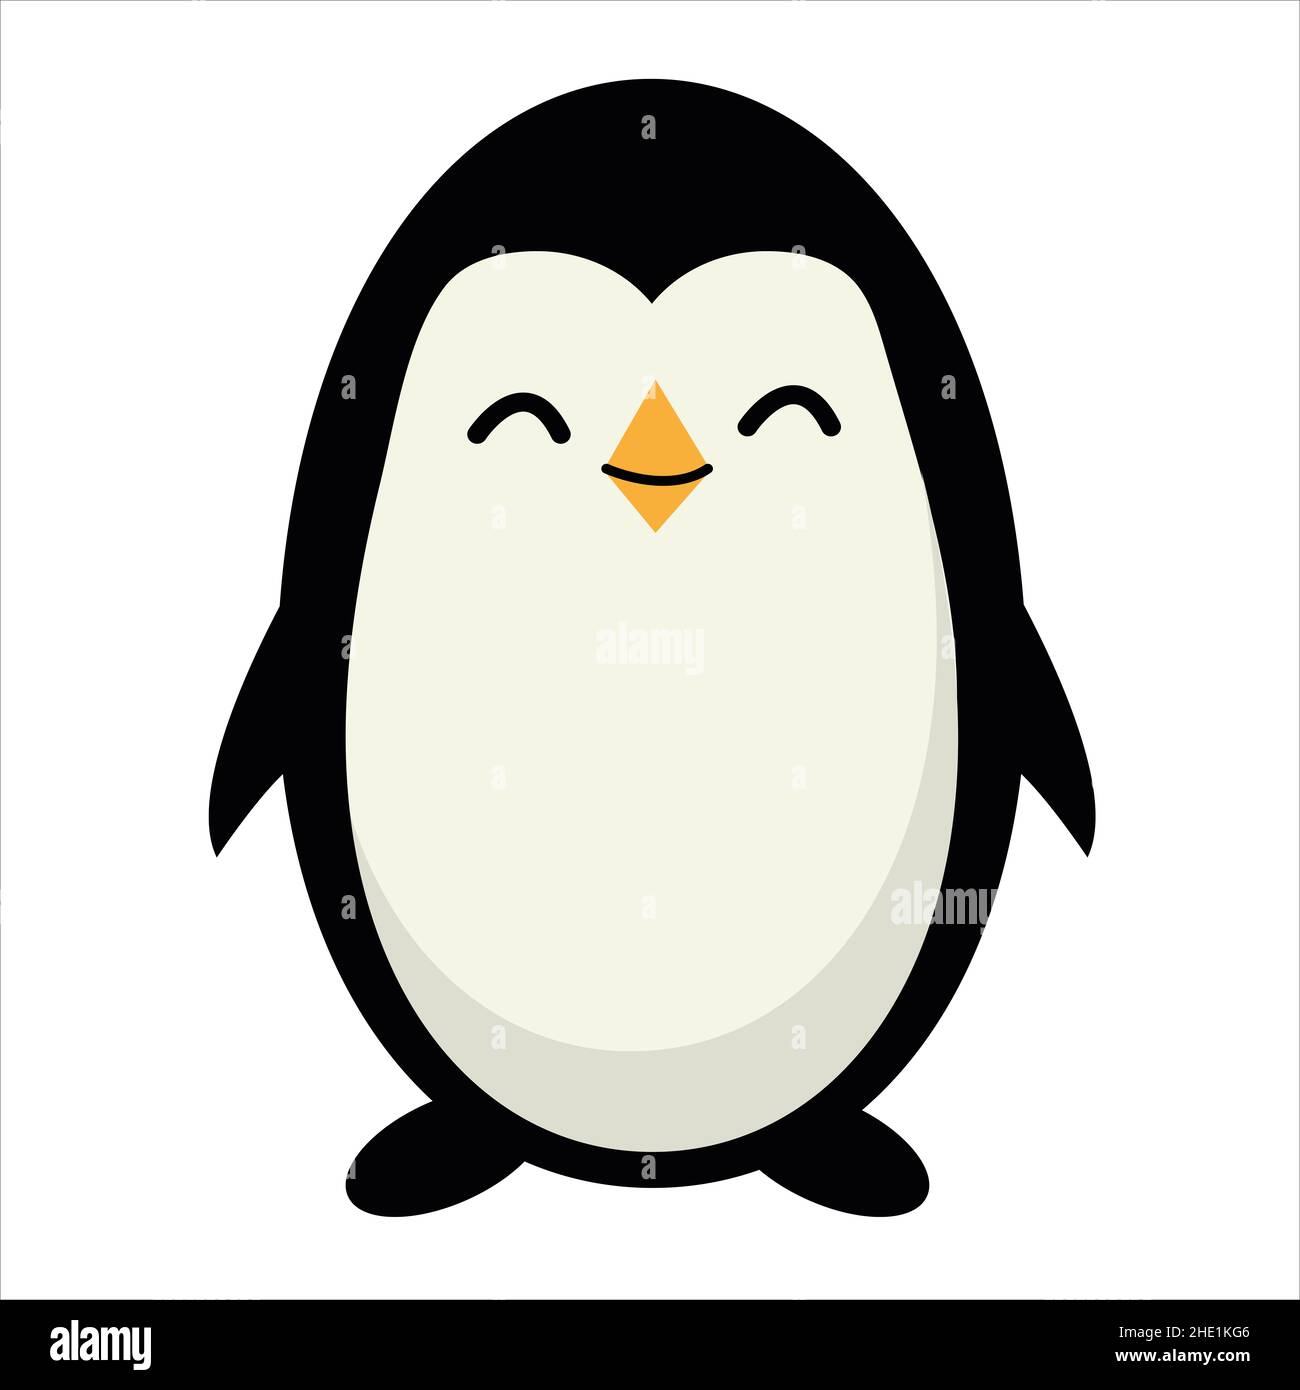 Niedliche Pinguin Illustration. pinguin Clip Art oder Bild. Stockfoto